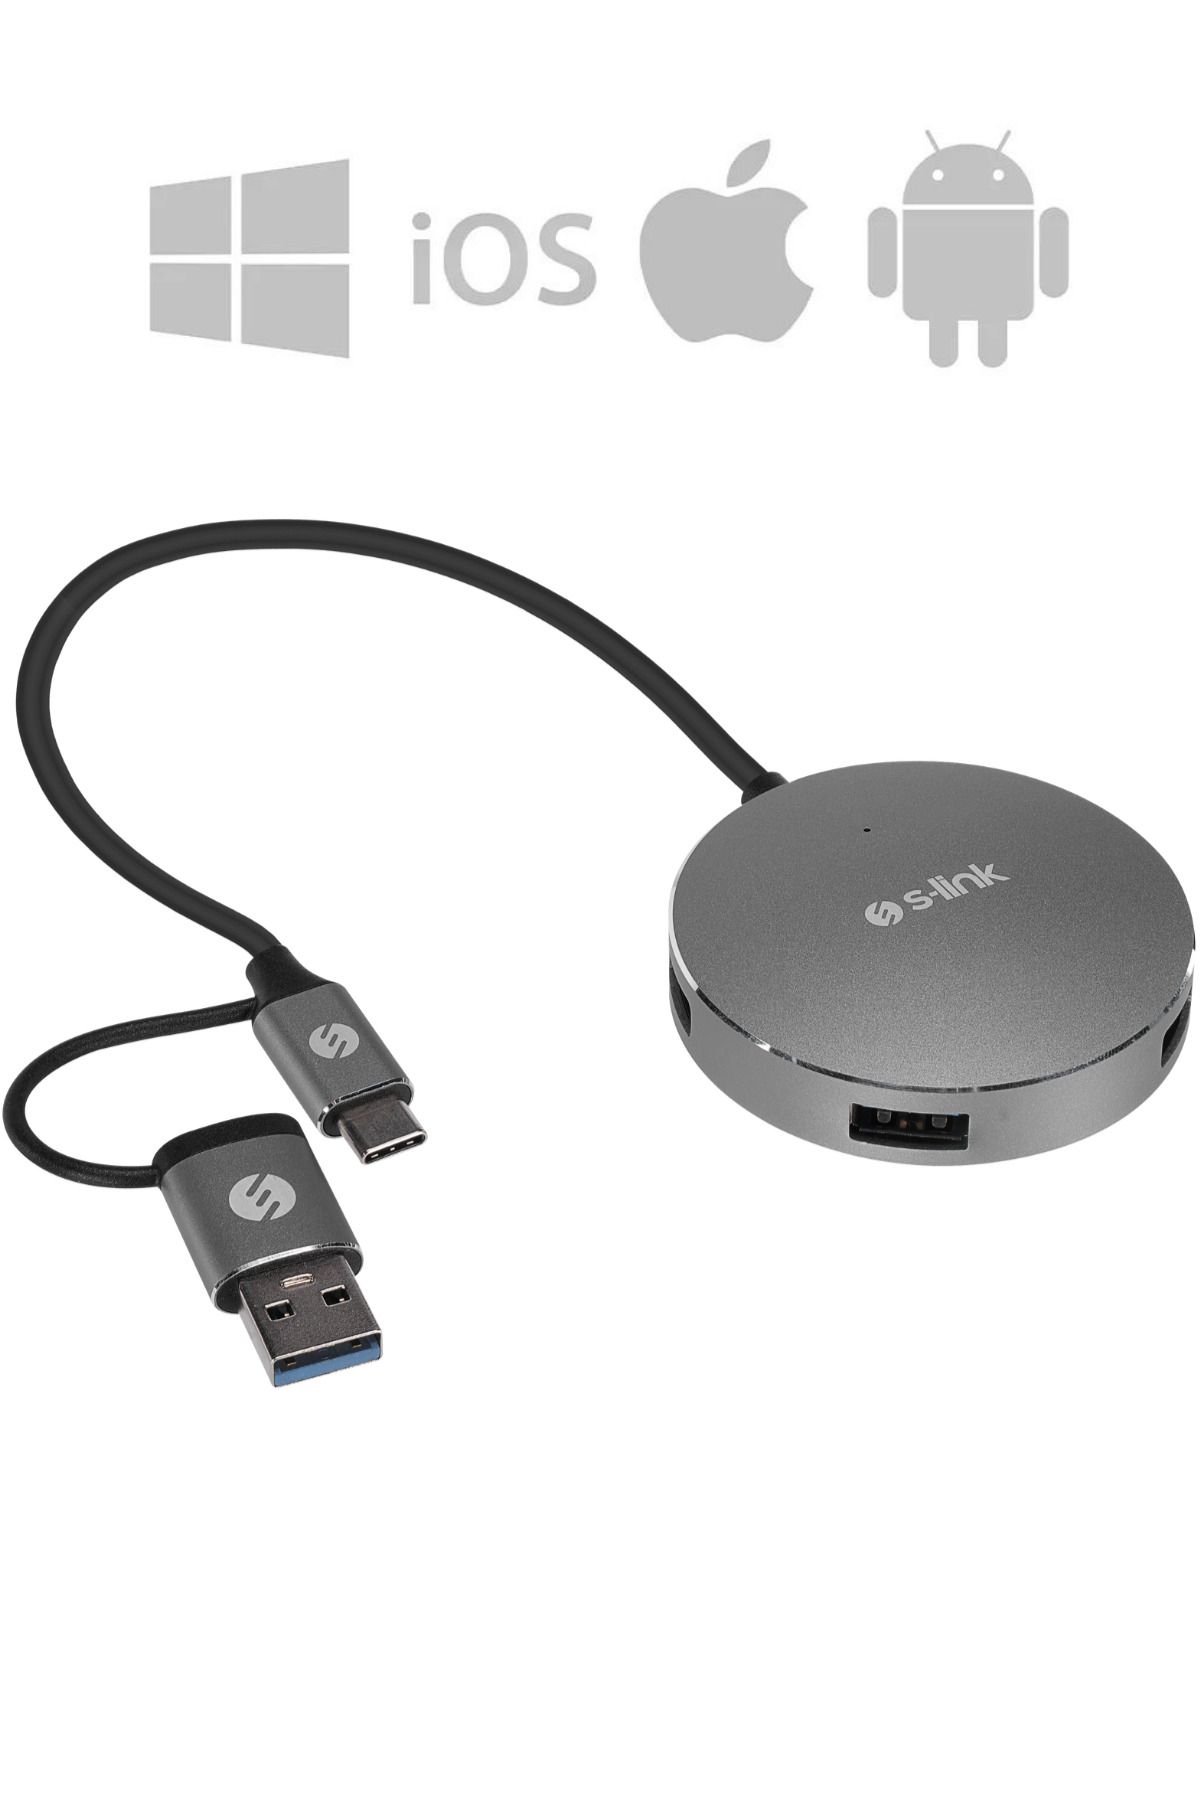 S-Link SWV-USBC020 4 Port USB3.0 TypeC+USB3.0 Çevirici Metal USB Hub Çevirici Dönüştürücü Çoklayıcı